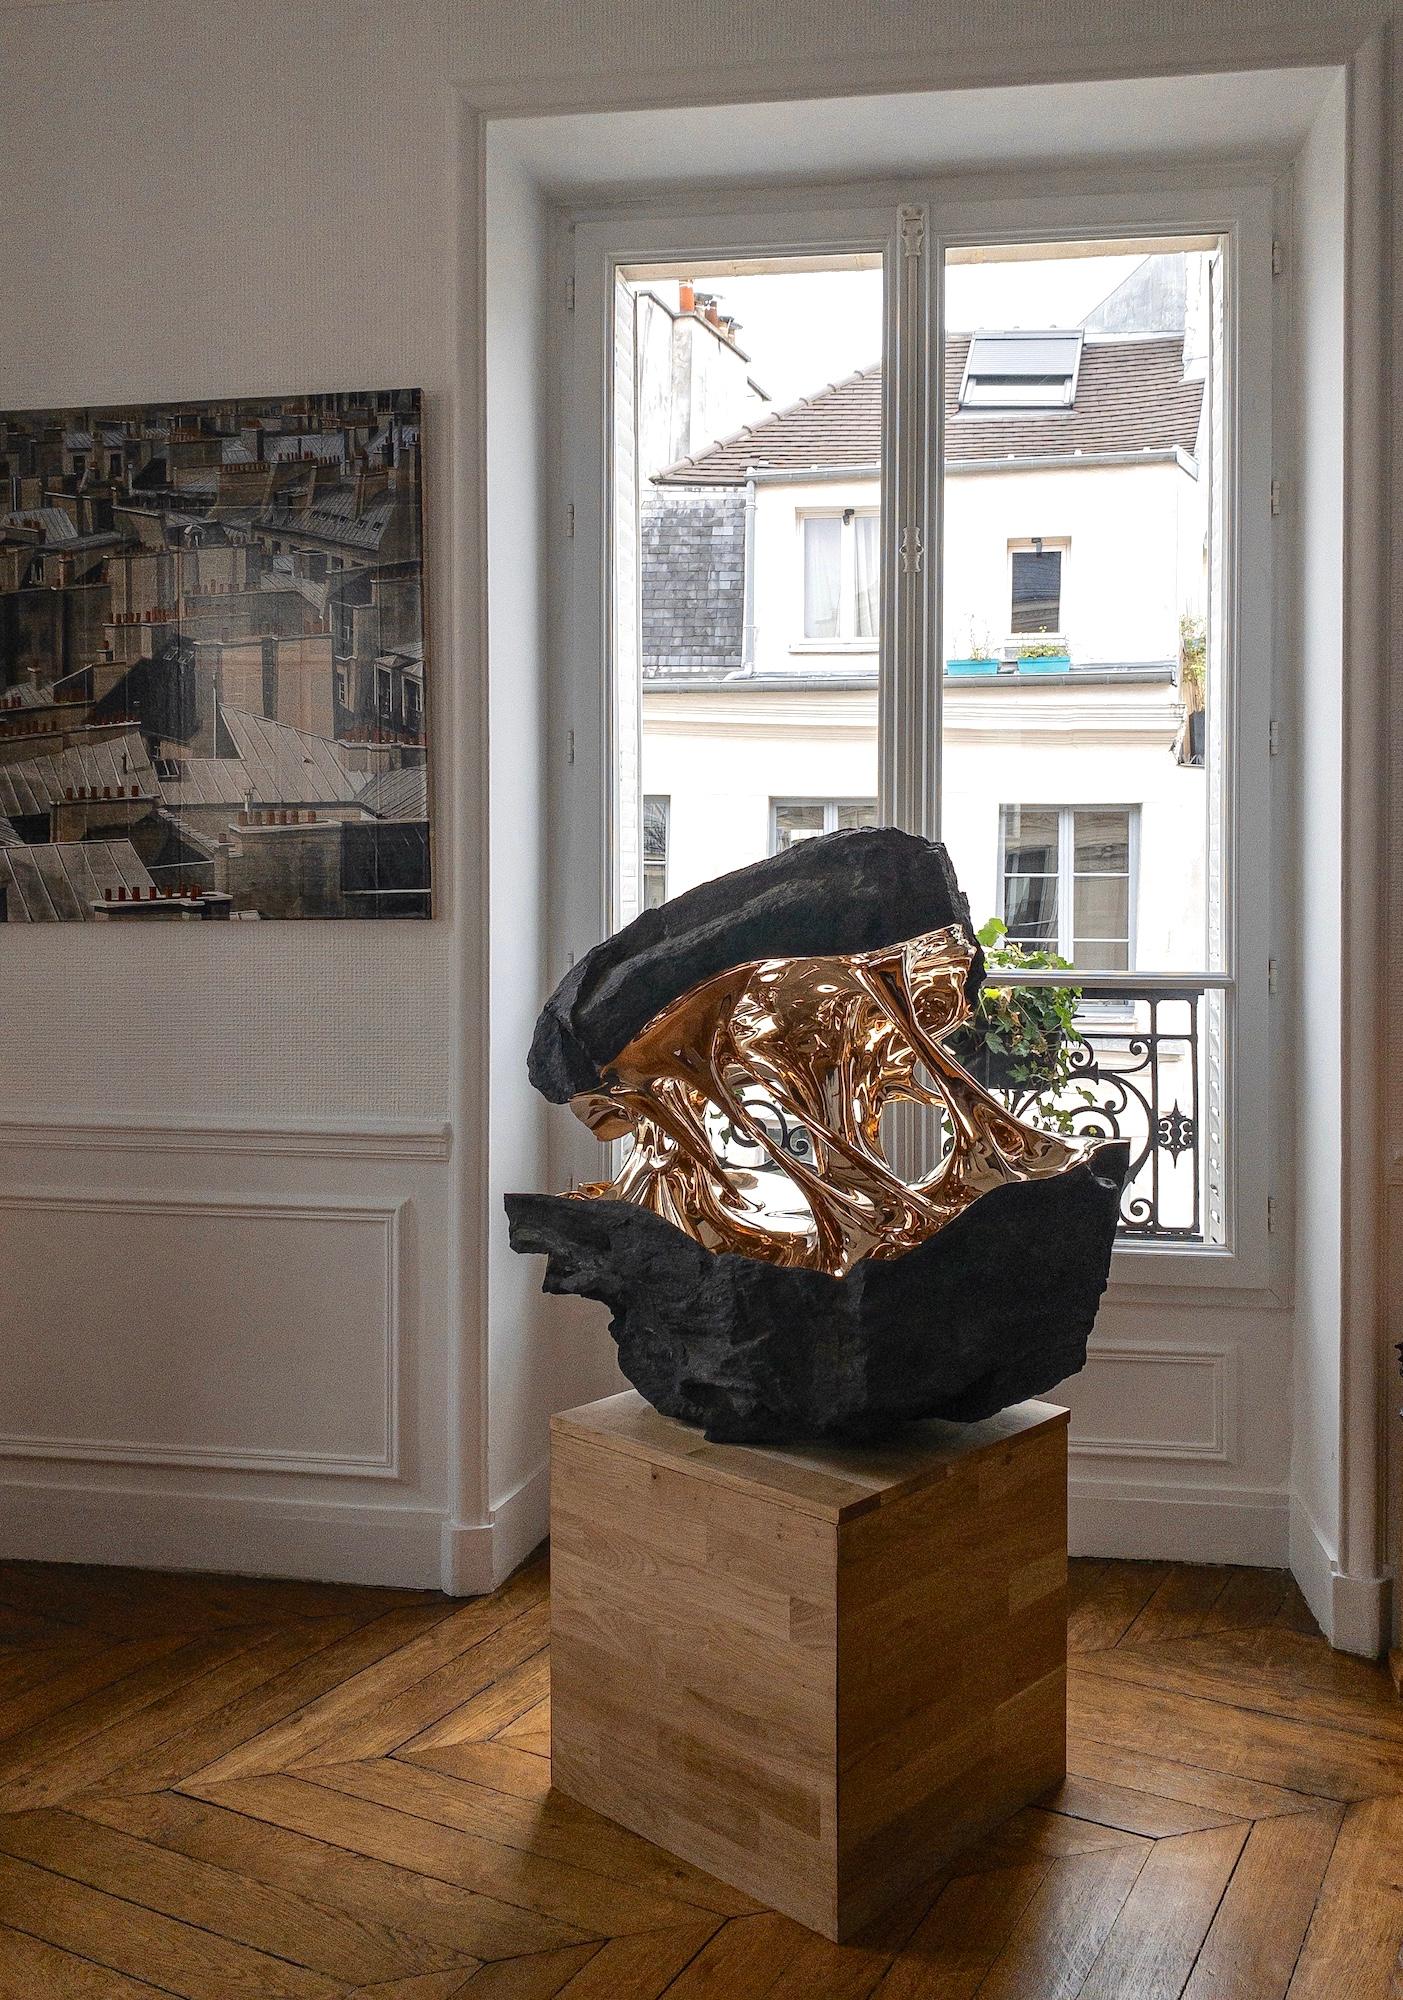 Gaïa by Romain Langlois - Rock-like bronze sculpture, golden, abstract For Sale 7